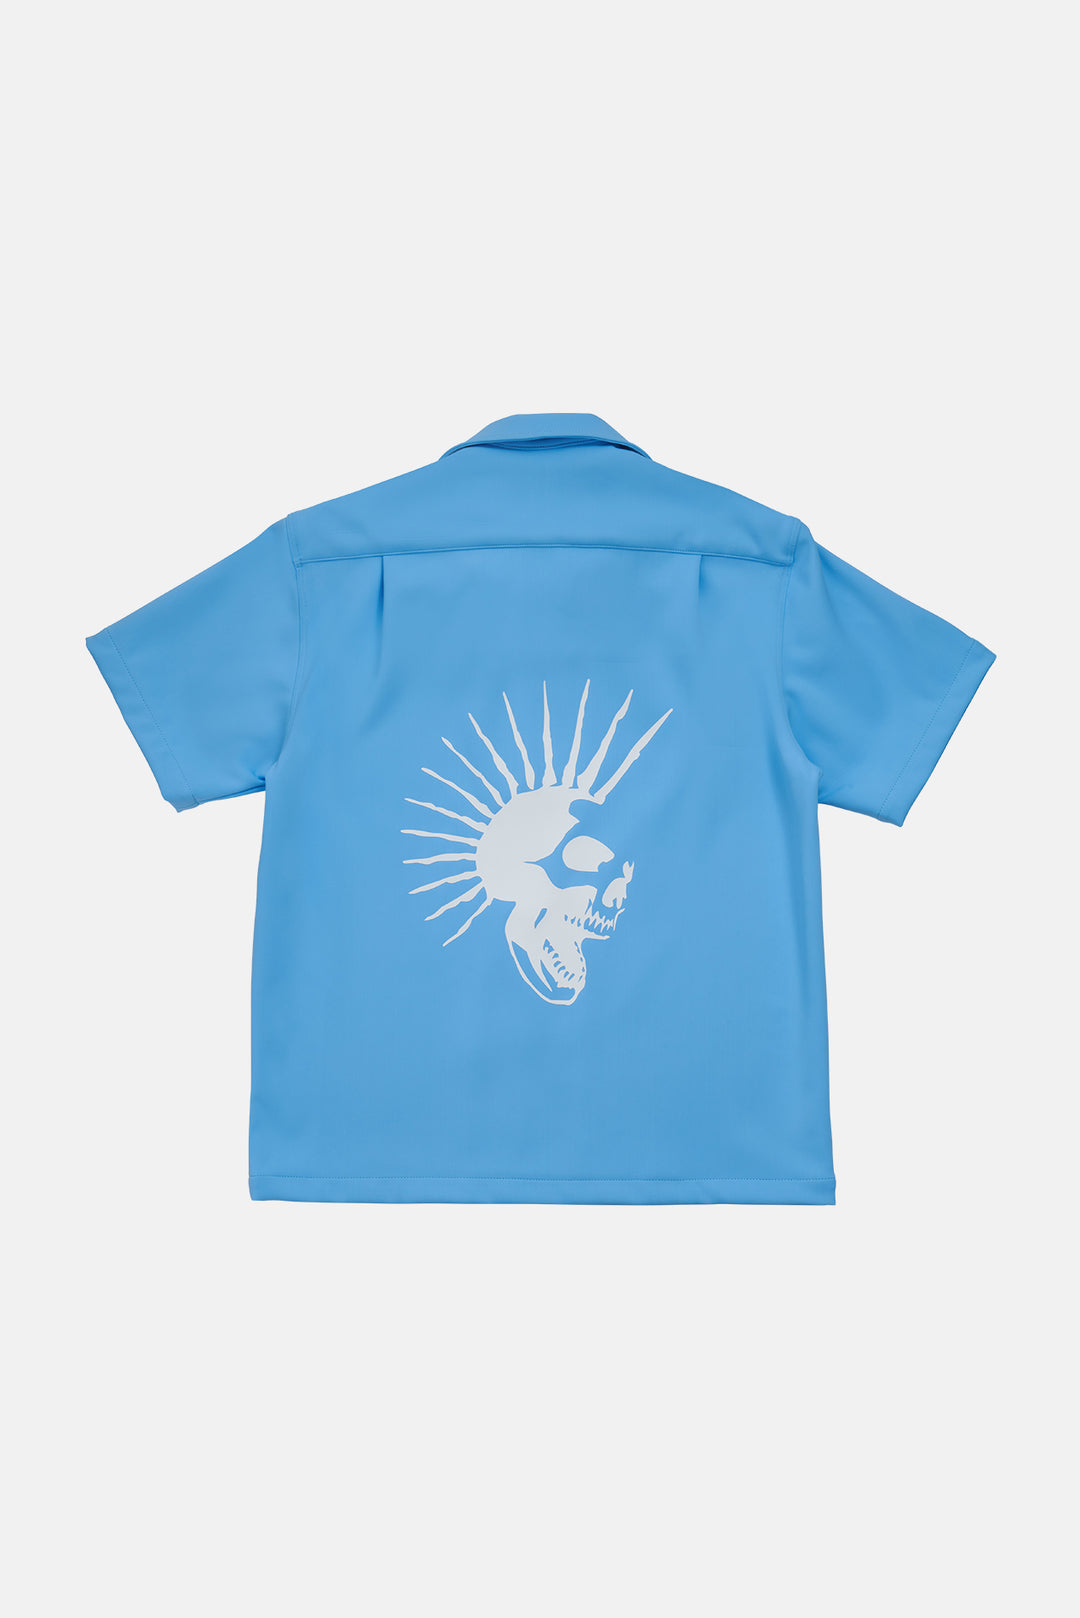 Neoprene Camp Shirt Columbia Blue - blueandcream